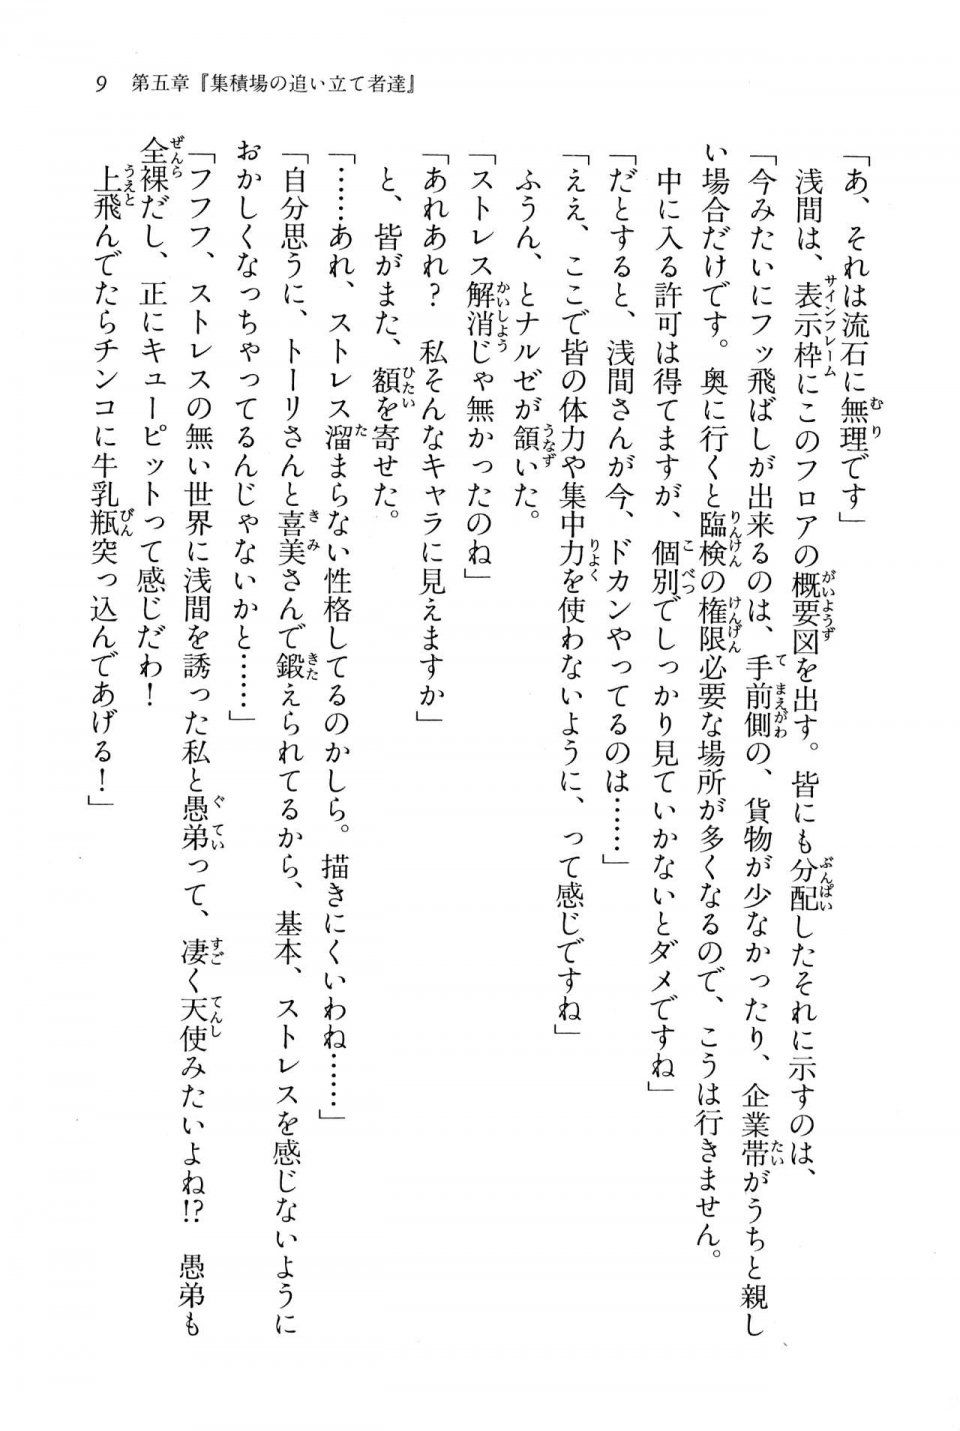 Kyoukai Senjou no Horizon BD Special Mininovel Vol 6(3B) - Photo #13